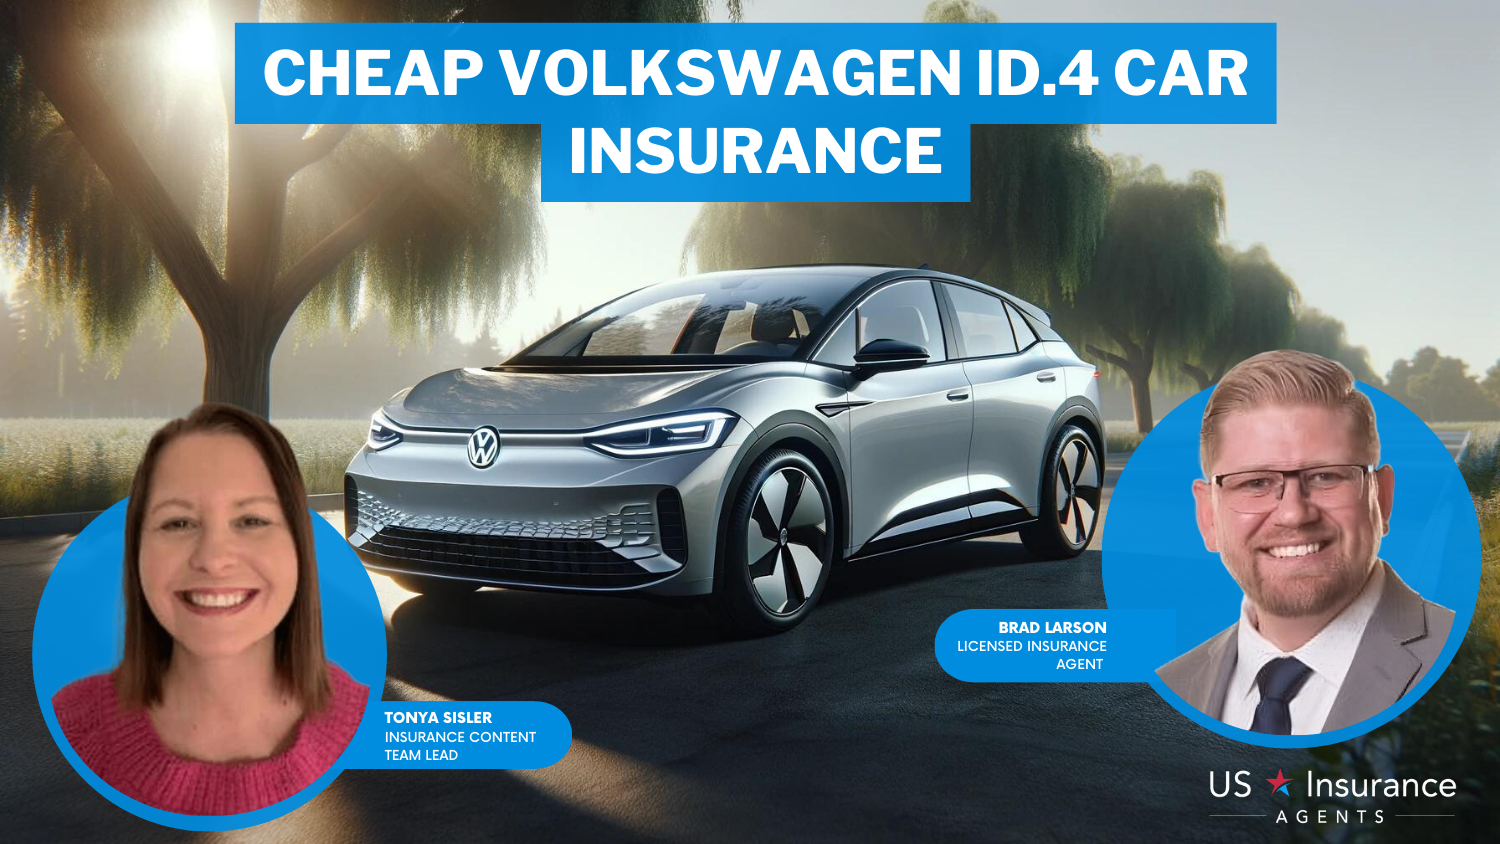 Cheap Volkswagen ID.4 Car Insurance: State Farm, Progressive, and Travelers